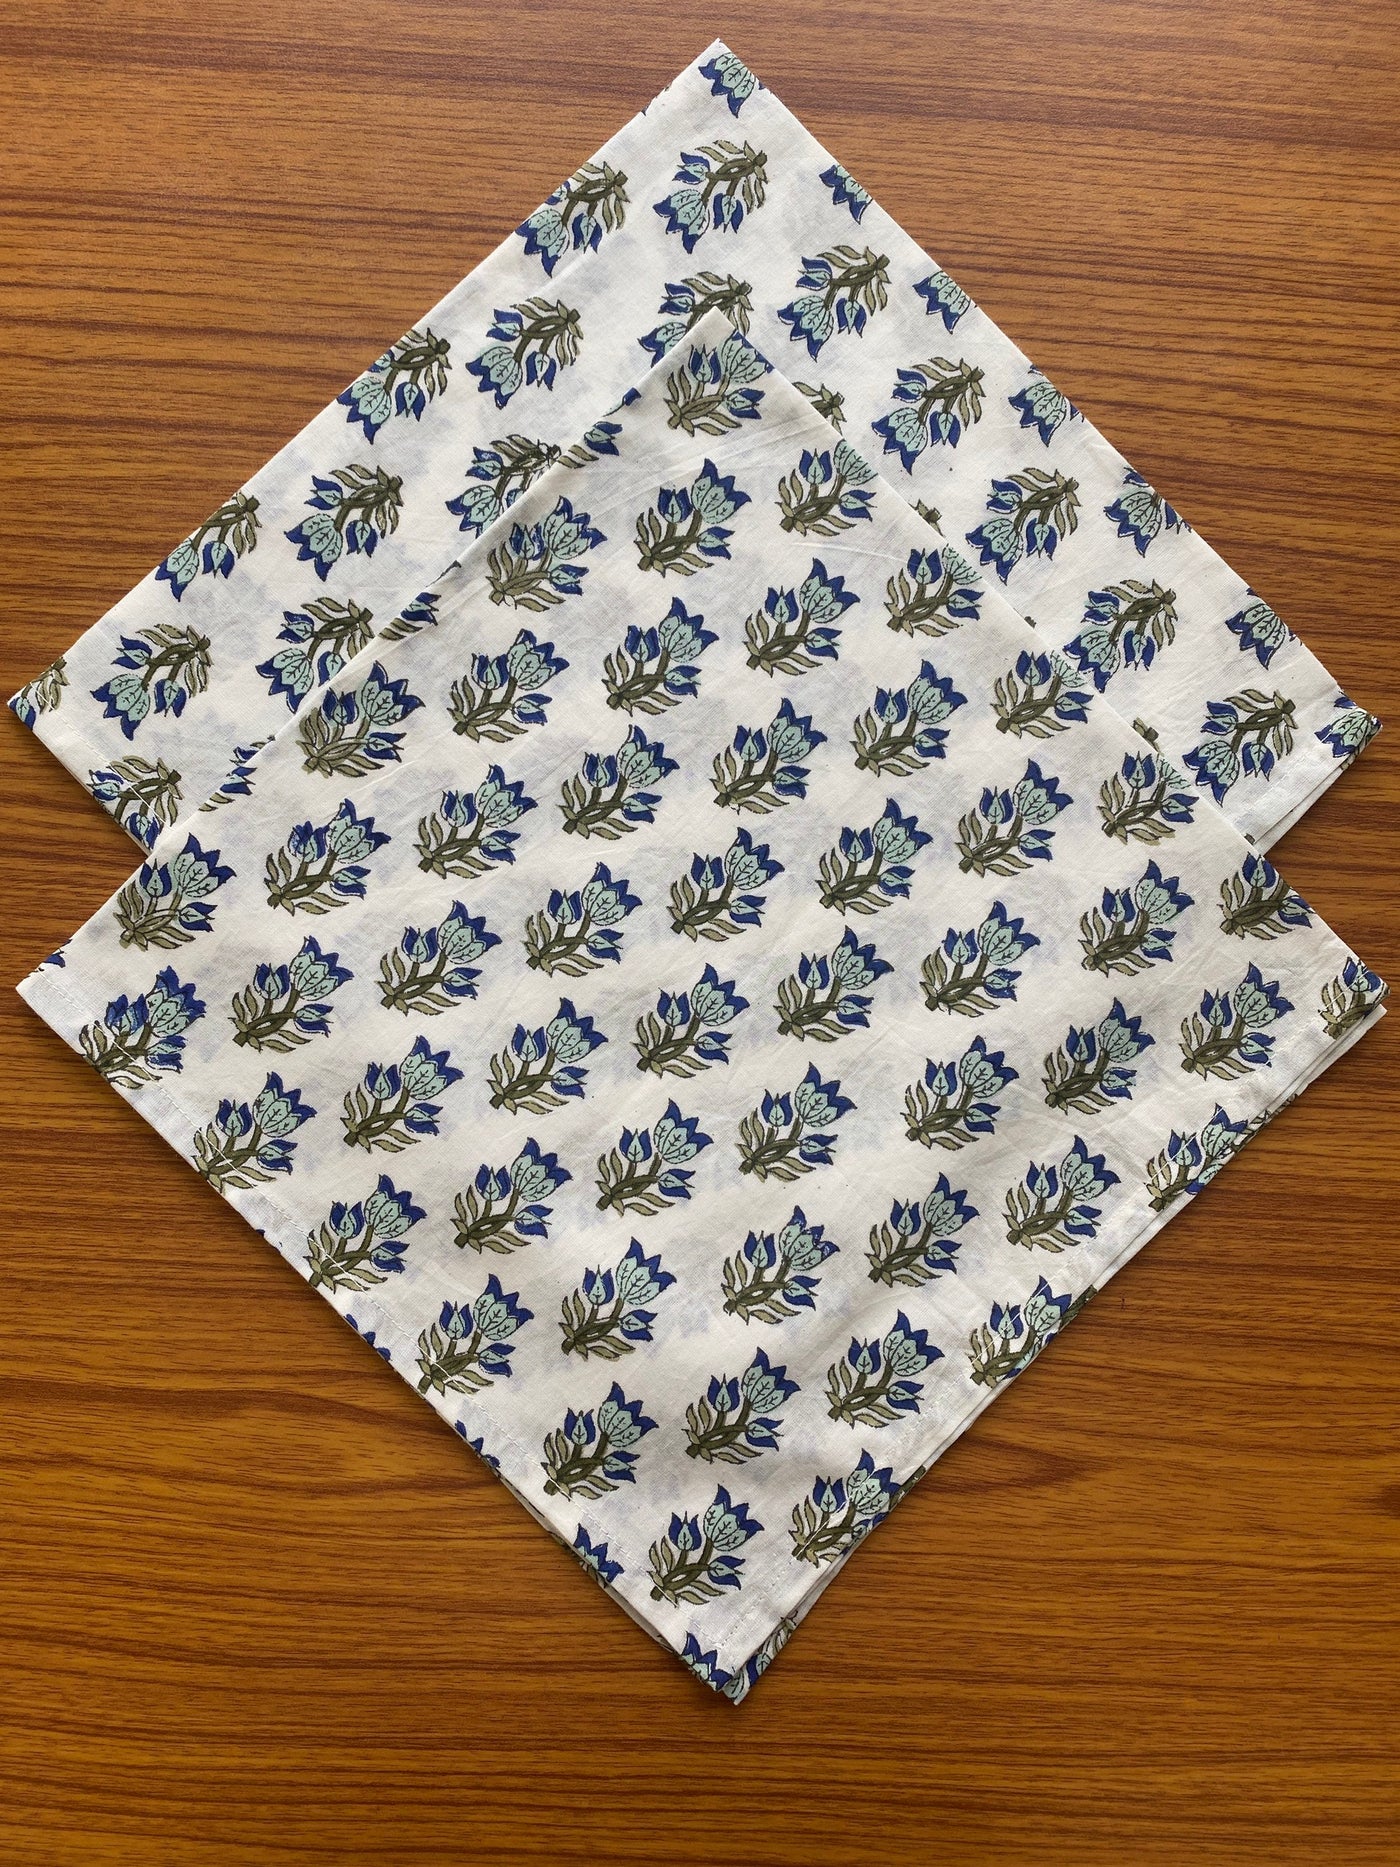 Fabricrush Catalina Blue, Olive, Tea and Moss Green Indian Hand Block Printed 100% Cotton Cloth Napkins, 18x18"-Cocktail Napkins, 20x20"- Dinner Napkins